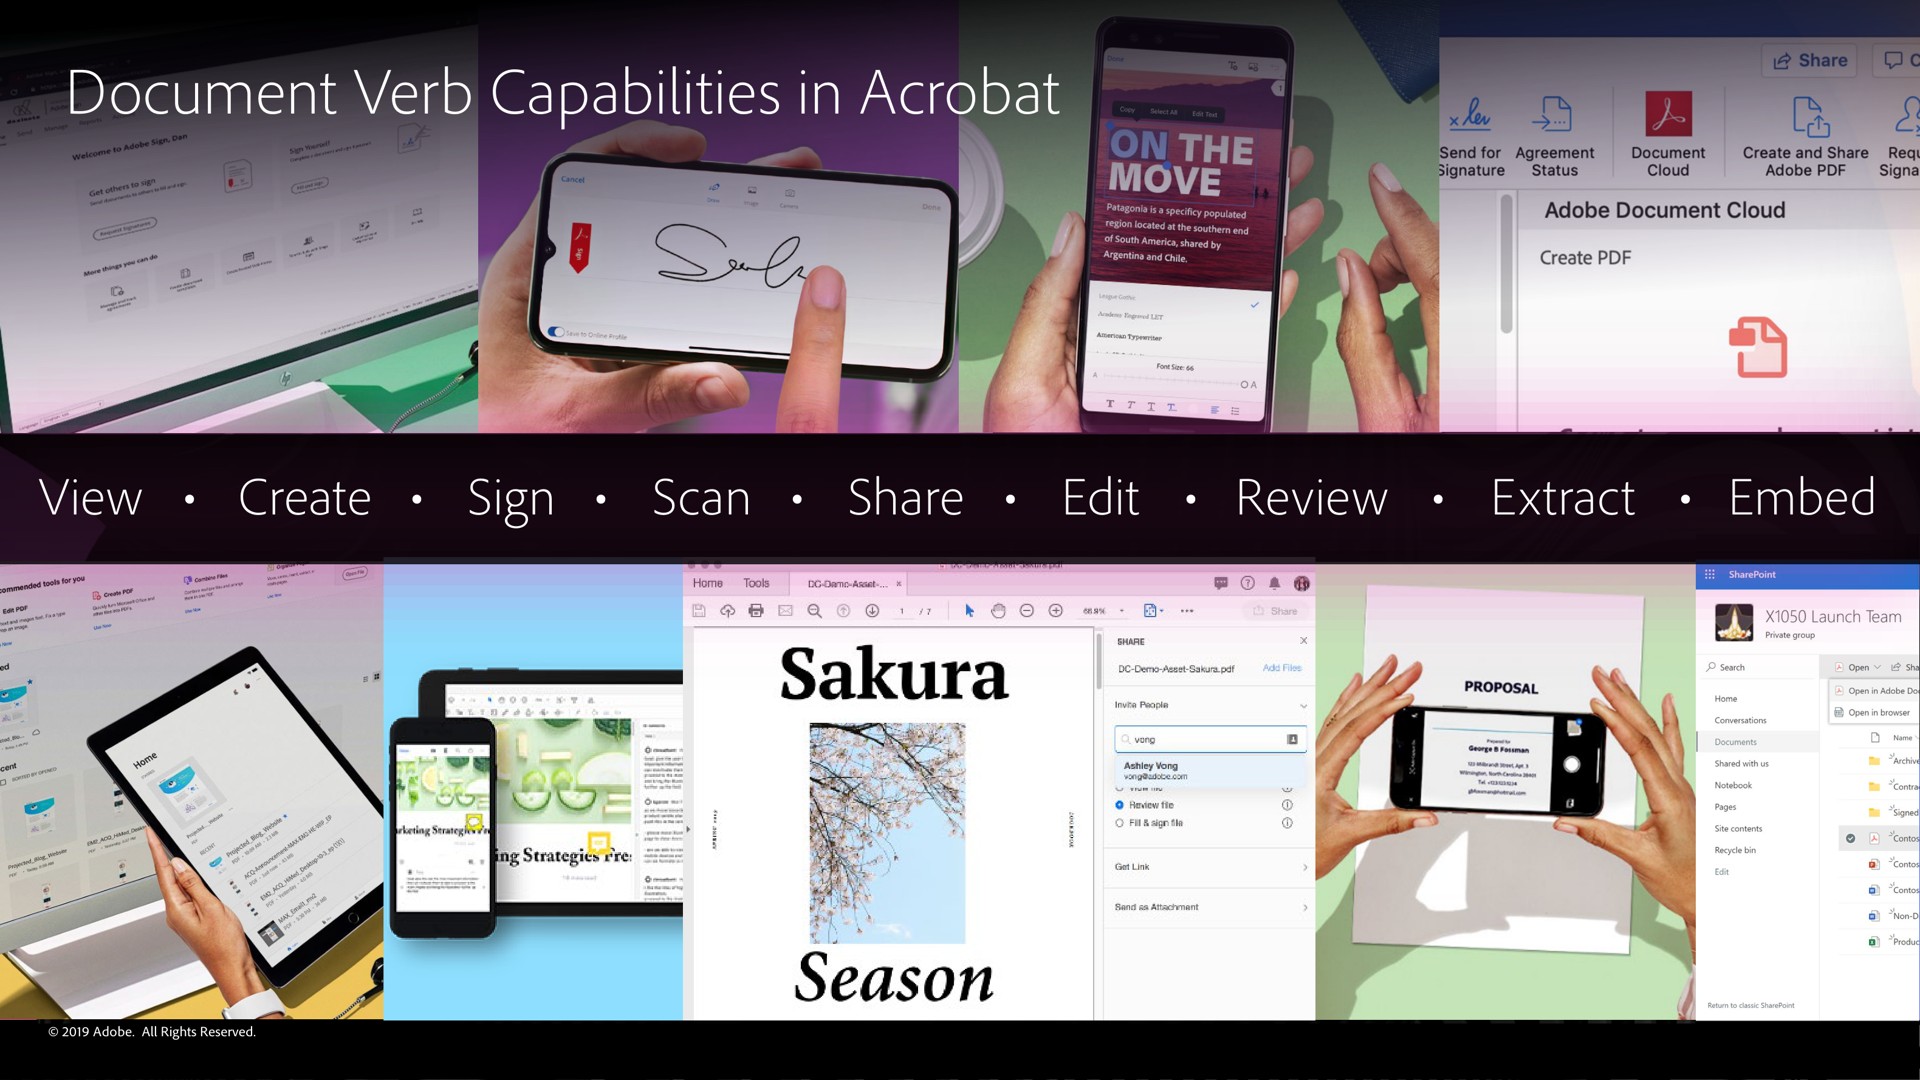 document verb capabilities in acrobat season | Adobe